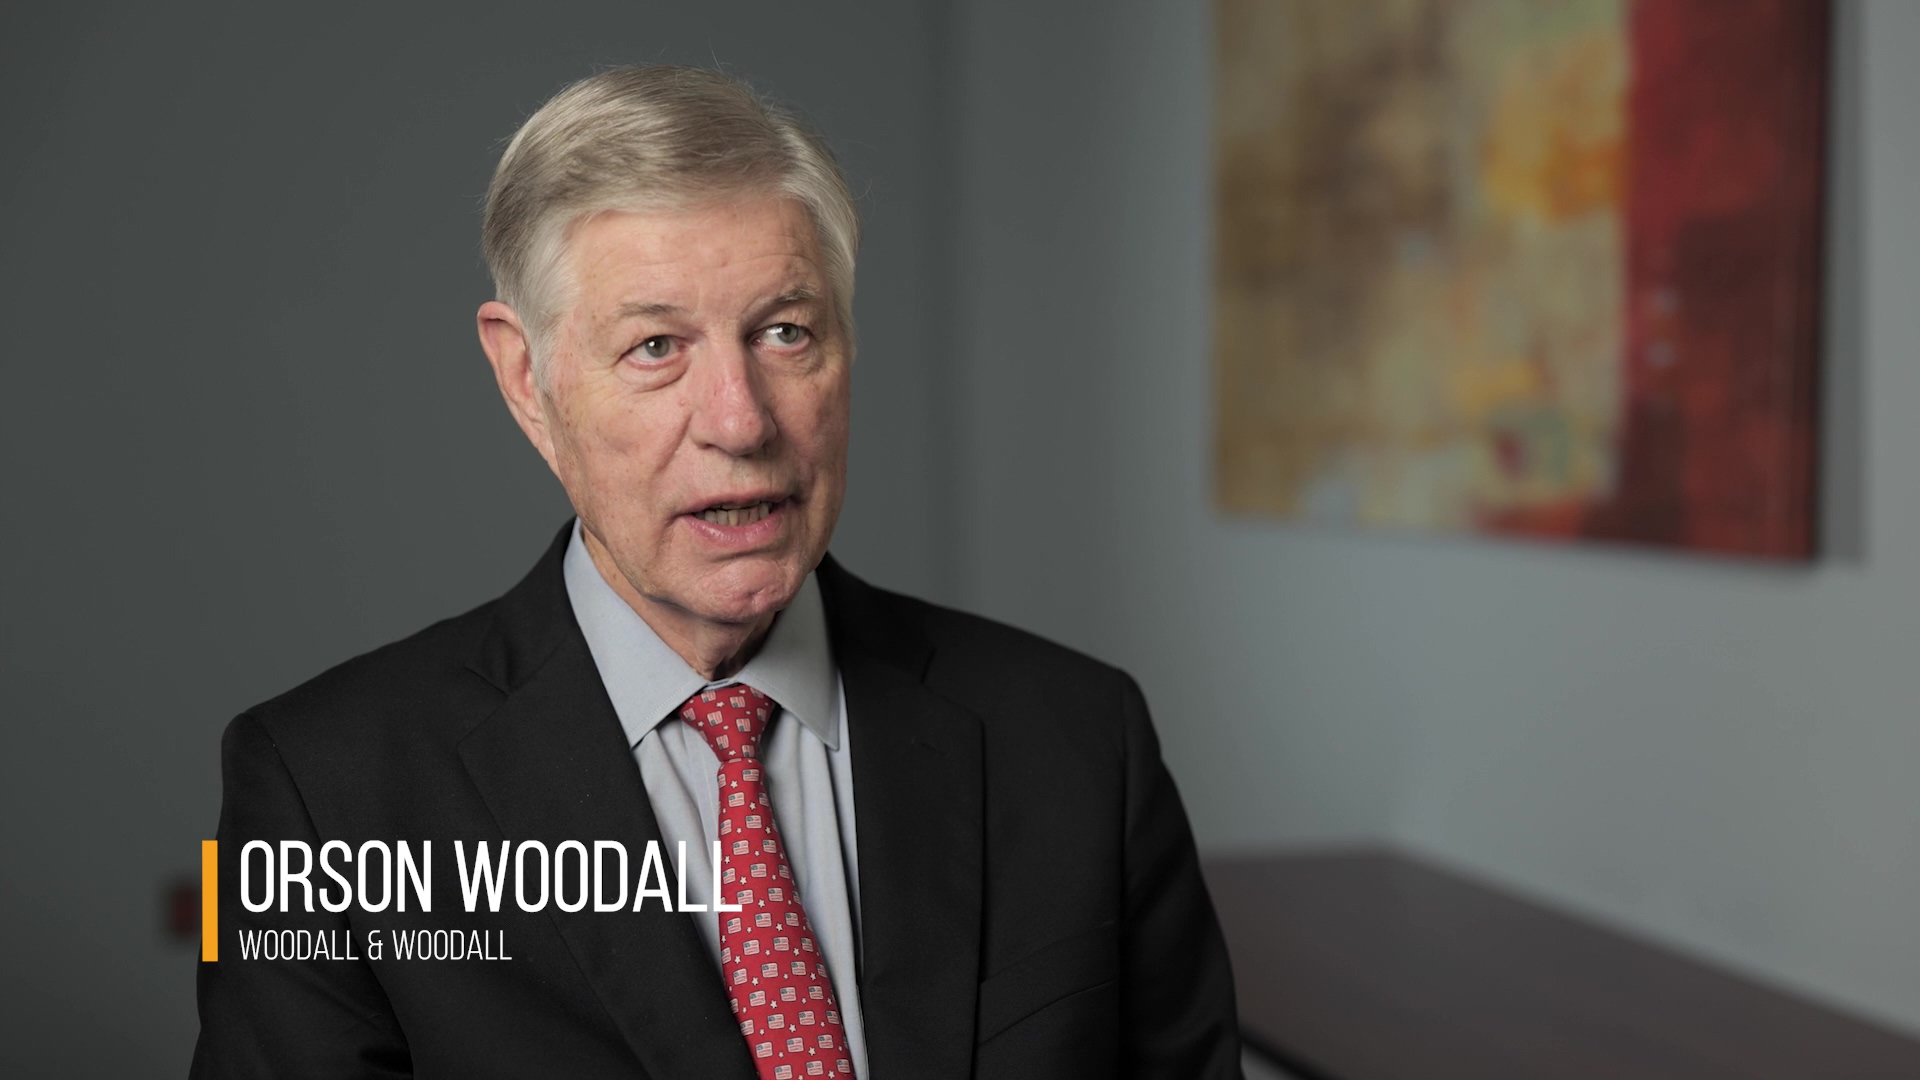 Woodall 2020 Orson Video 1